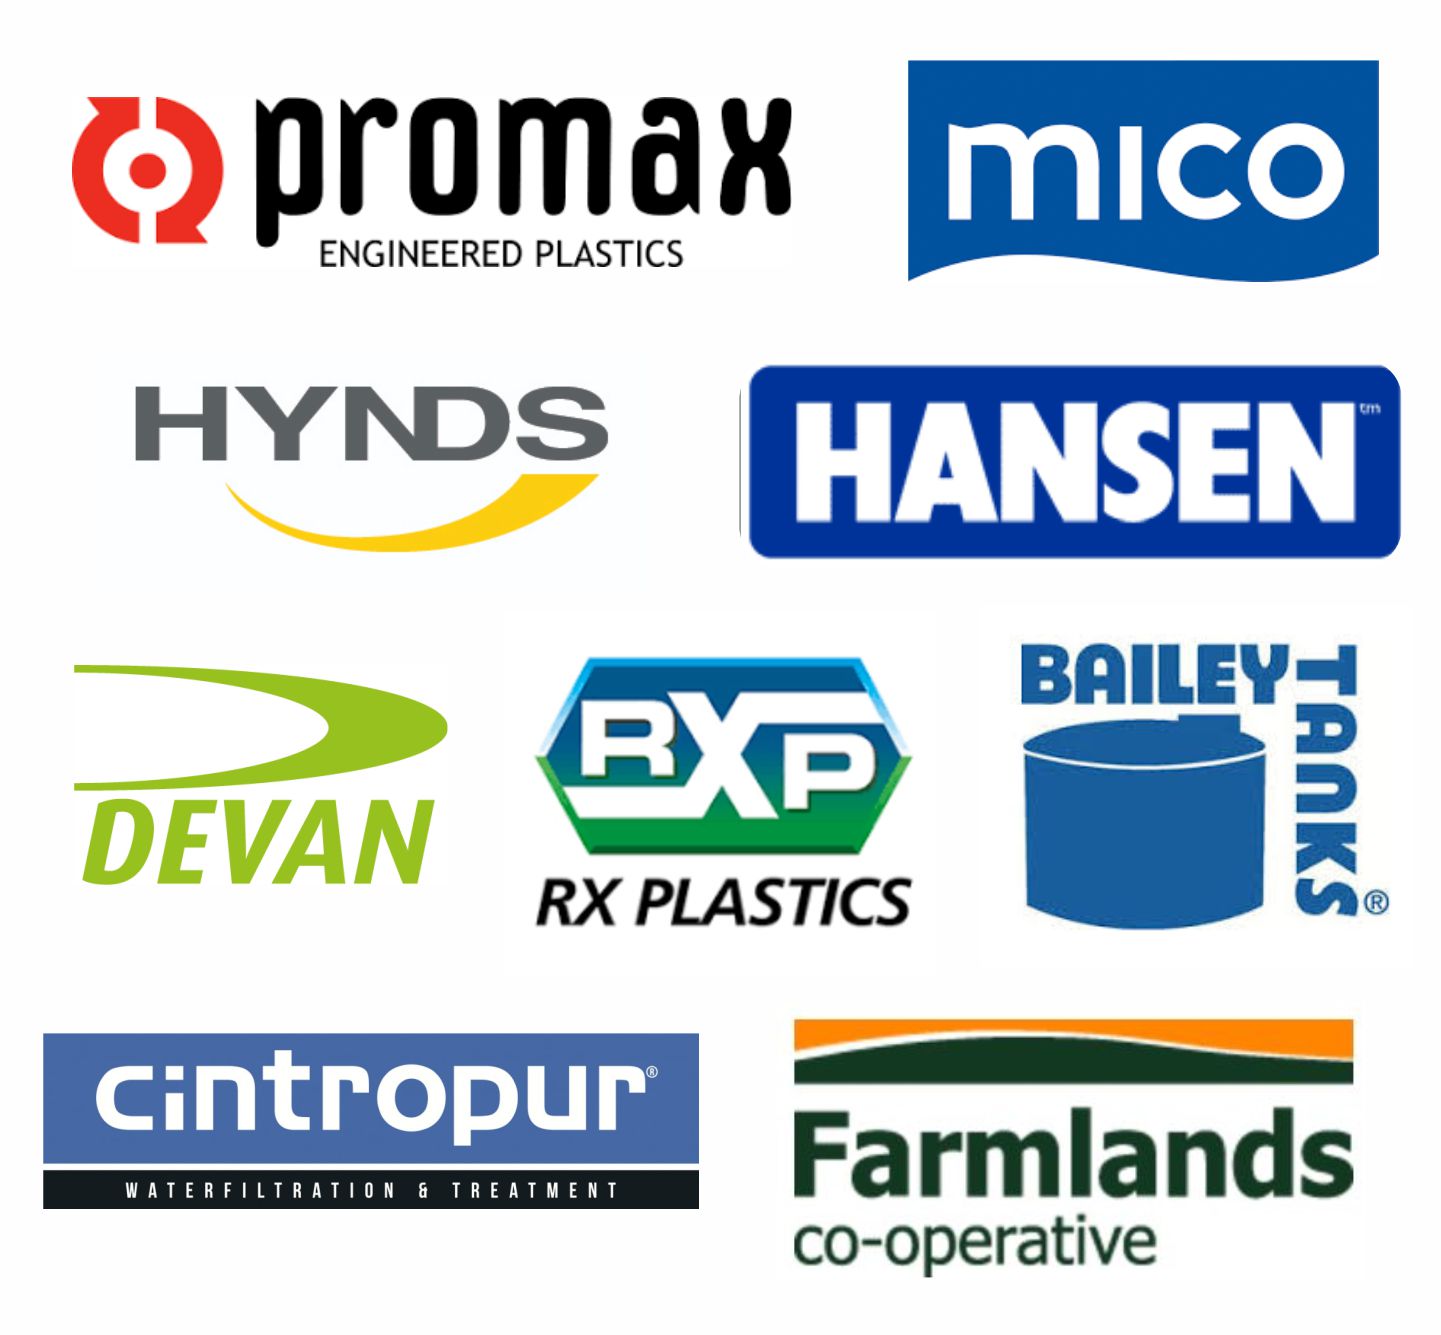 Promax water tanks, Devan water tanks, Bailey water tanks, Mico, RX Plastics, Hanson water supply products,